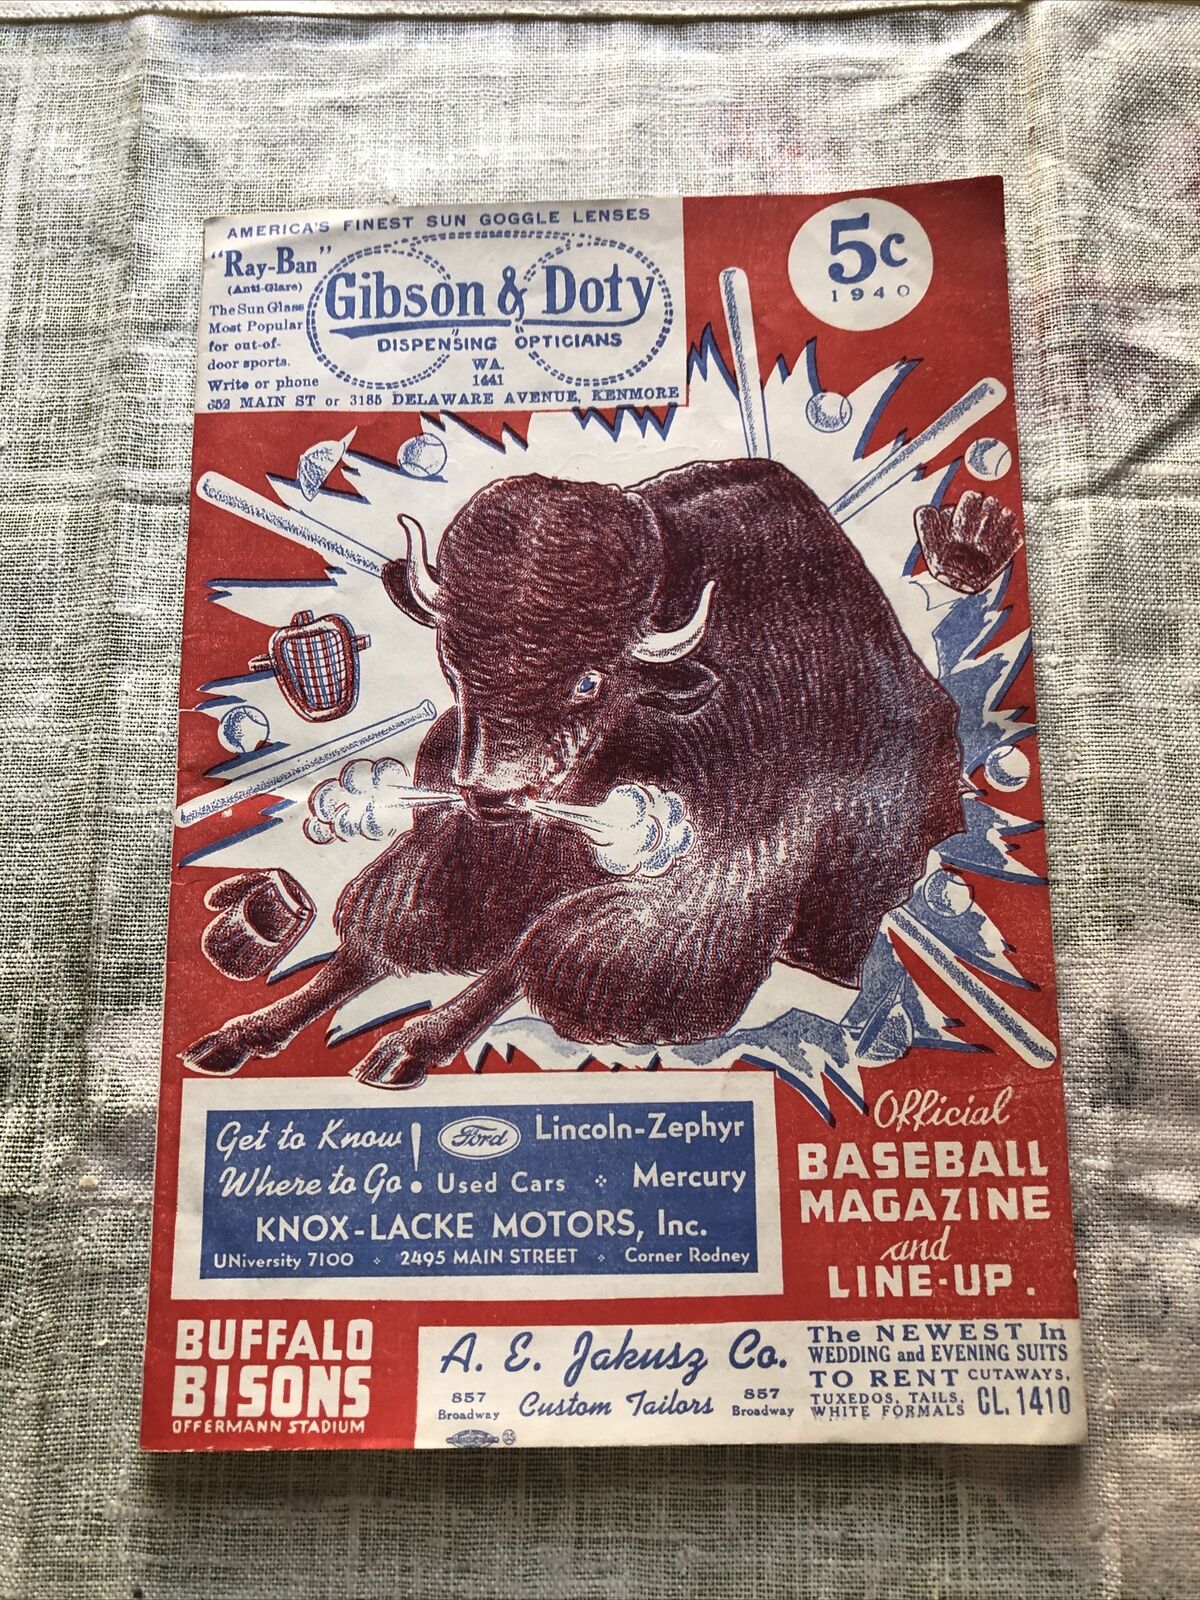 RARE Vintage Official Baseball Magazine & Line-Up Buffalo Bisons 1940